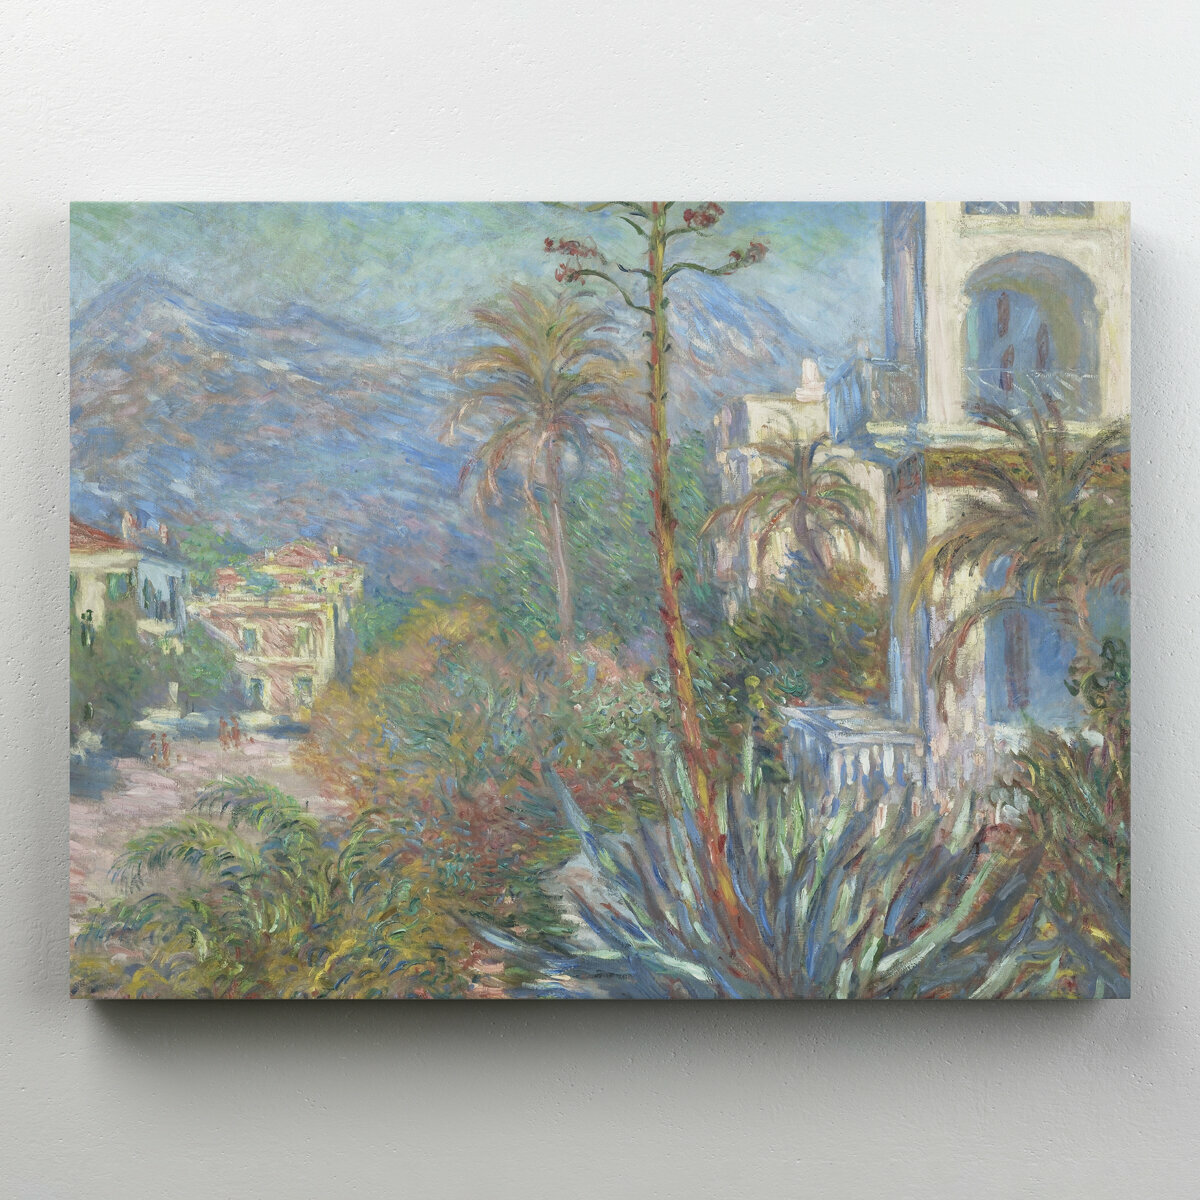 Интерьерная картина на холсте, репродукция "Бордигера - Клод Моне" размер 30x22 см